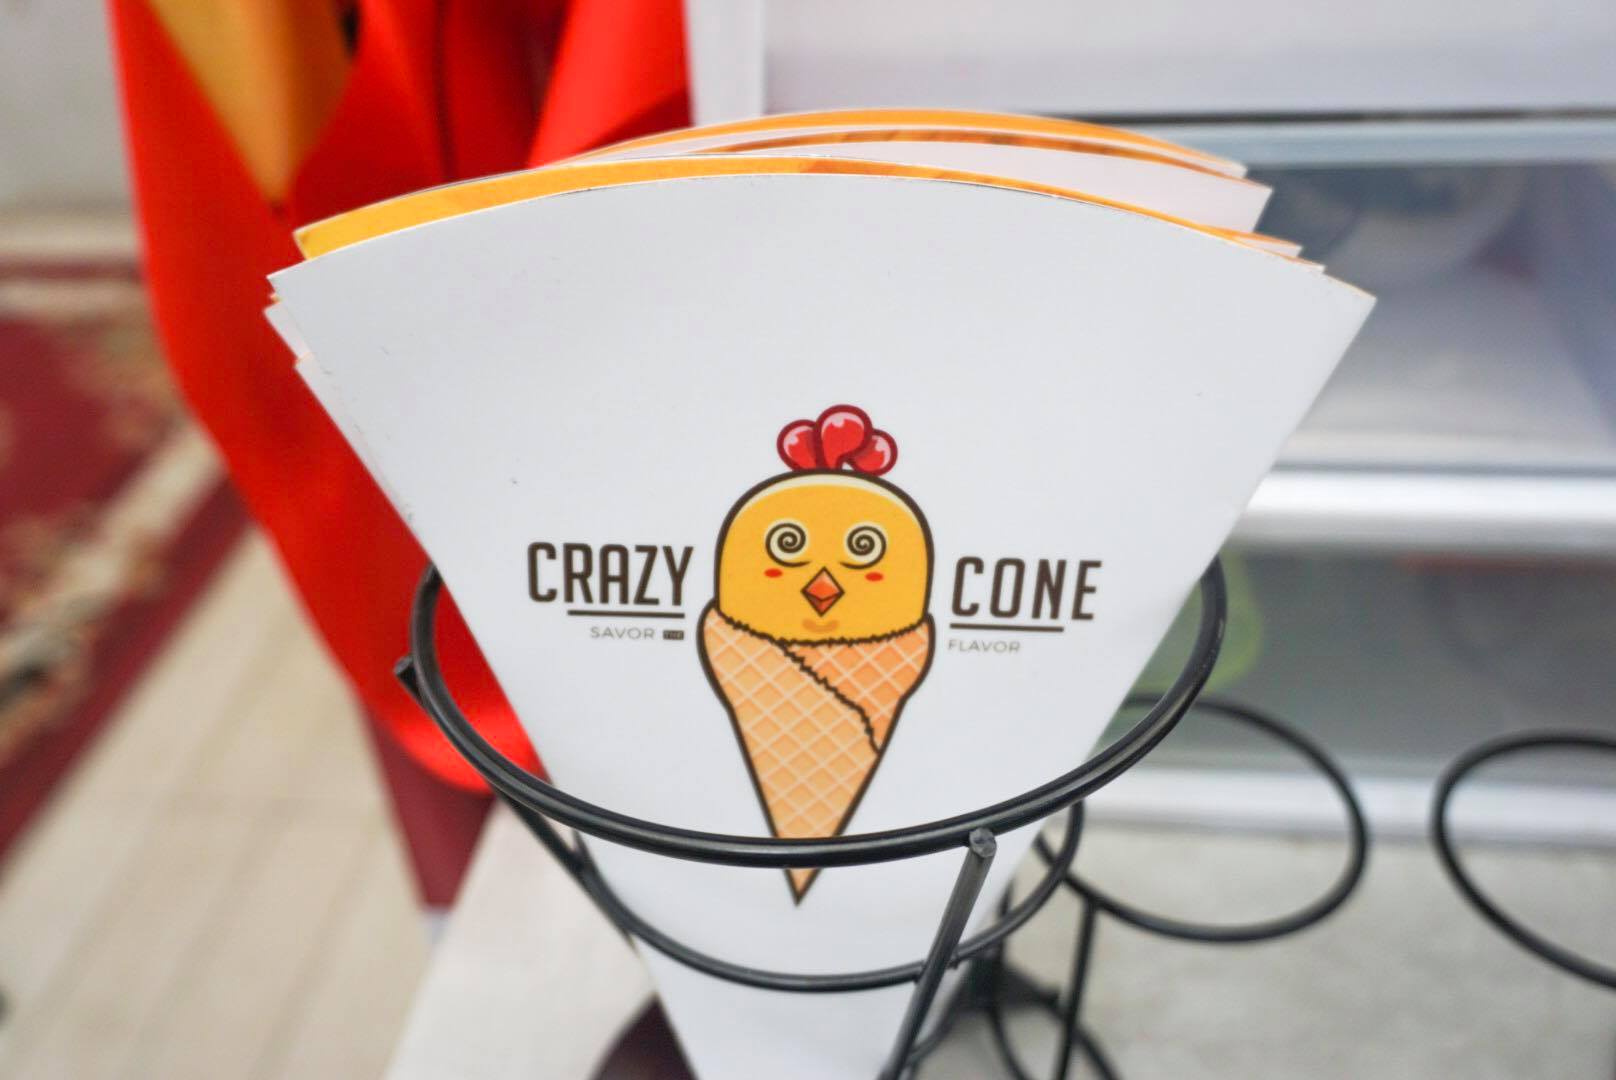 Crazy Cone menu. Photo: Kaka Corral